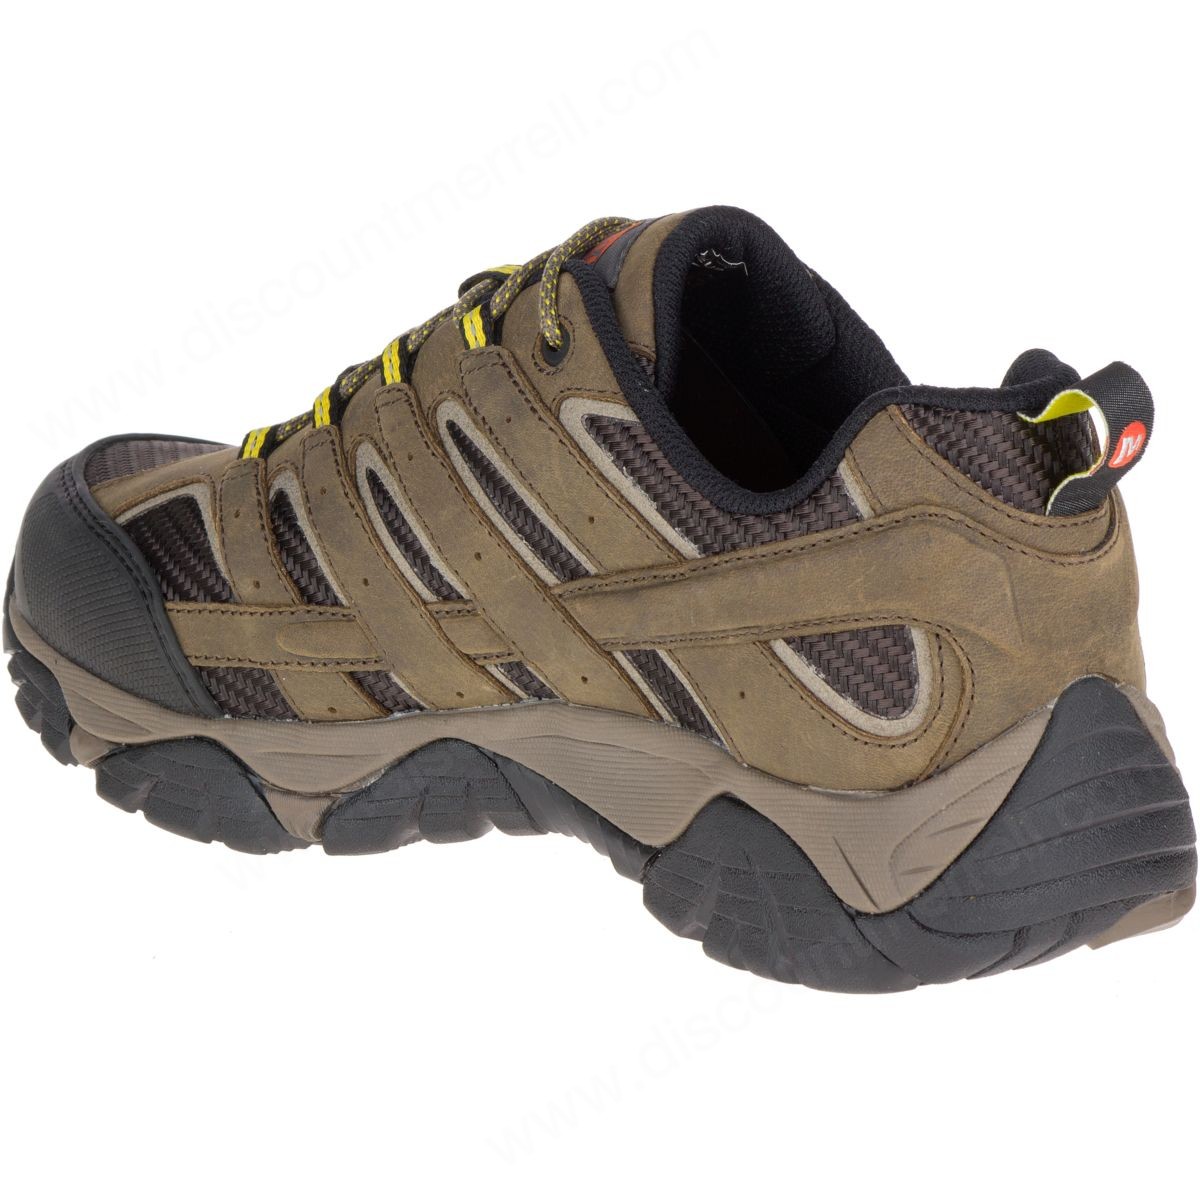 Merrell Man's Moab Ventilator Waterproof Work Shoes Boulder - -6